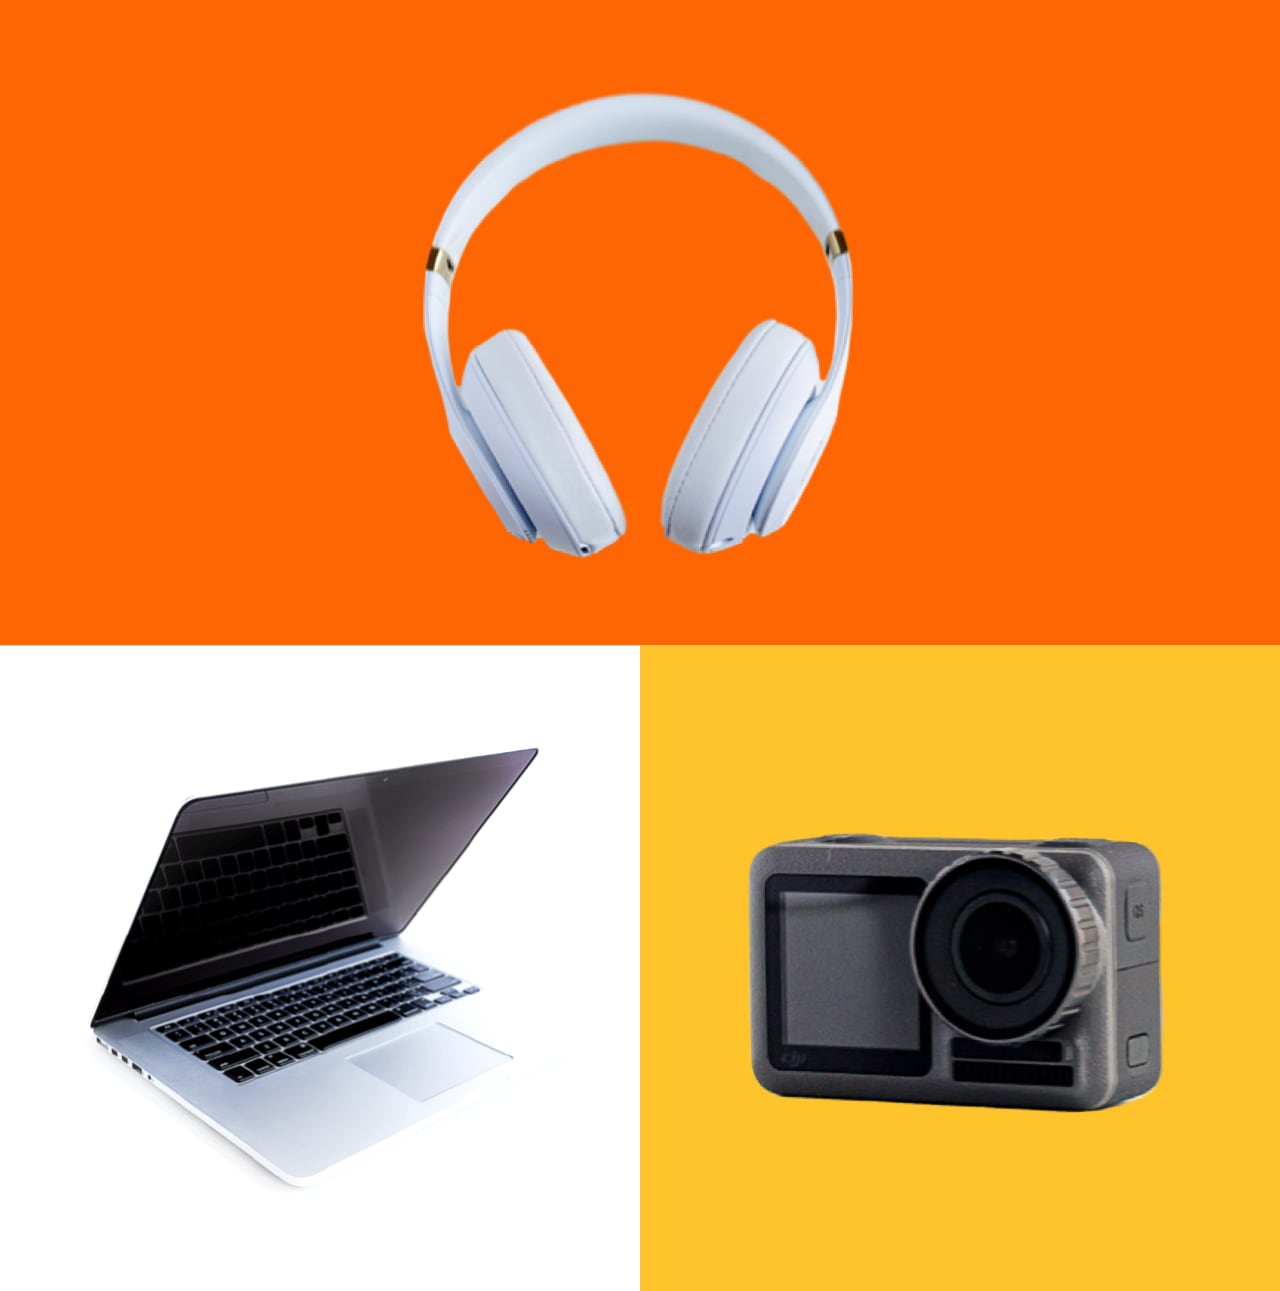 laptop, headphones and camera